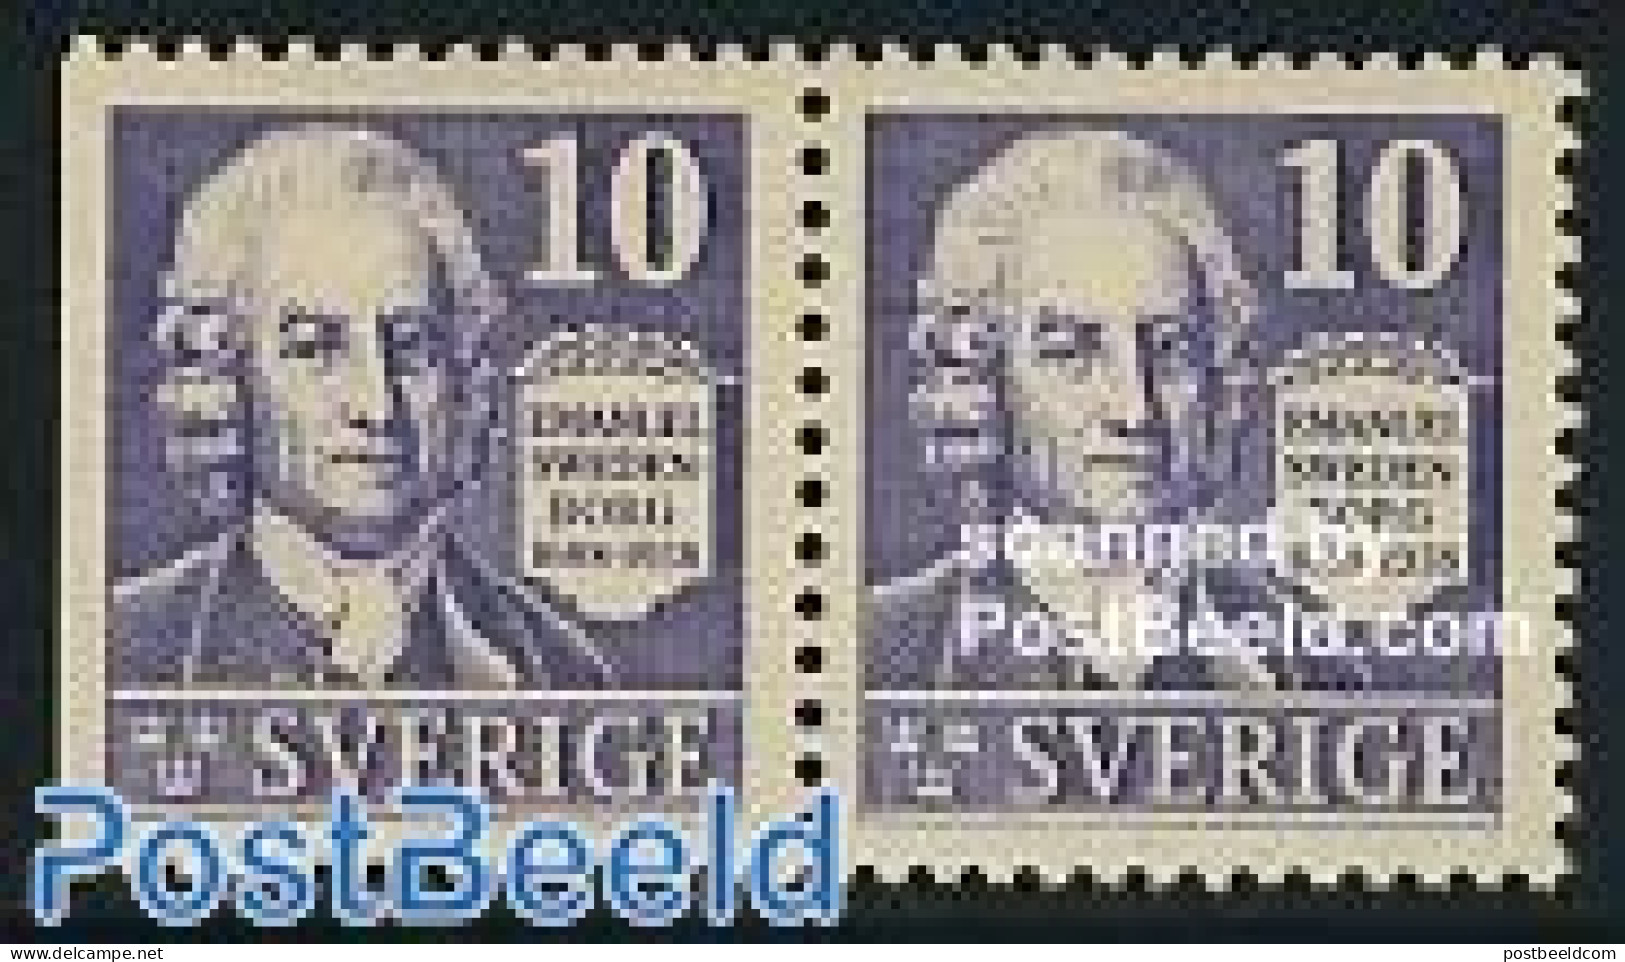 Sweden 1938 E. Swedenborg 2v (3 Sides Perforated), Mint NH, Science - Chemistry & Chemists - Unused Stamps